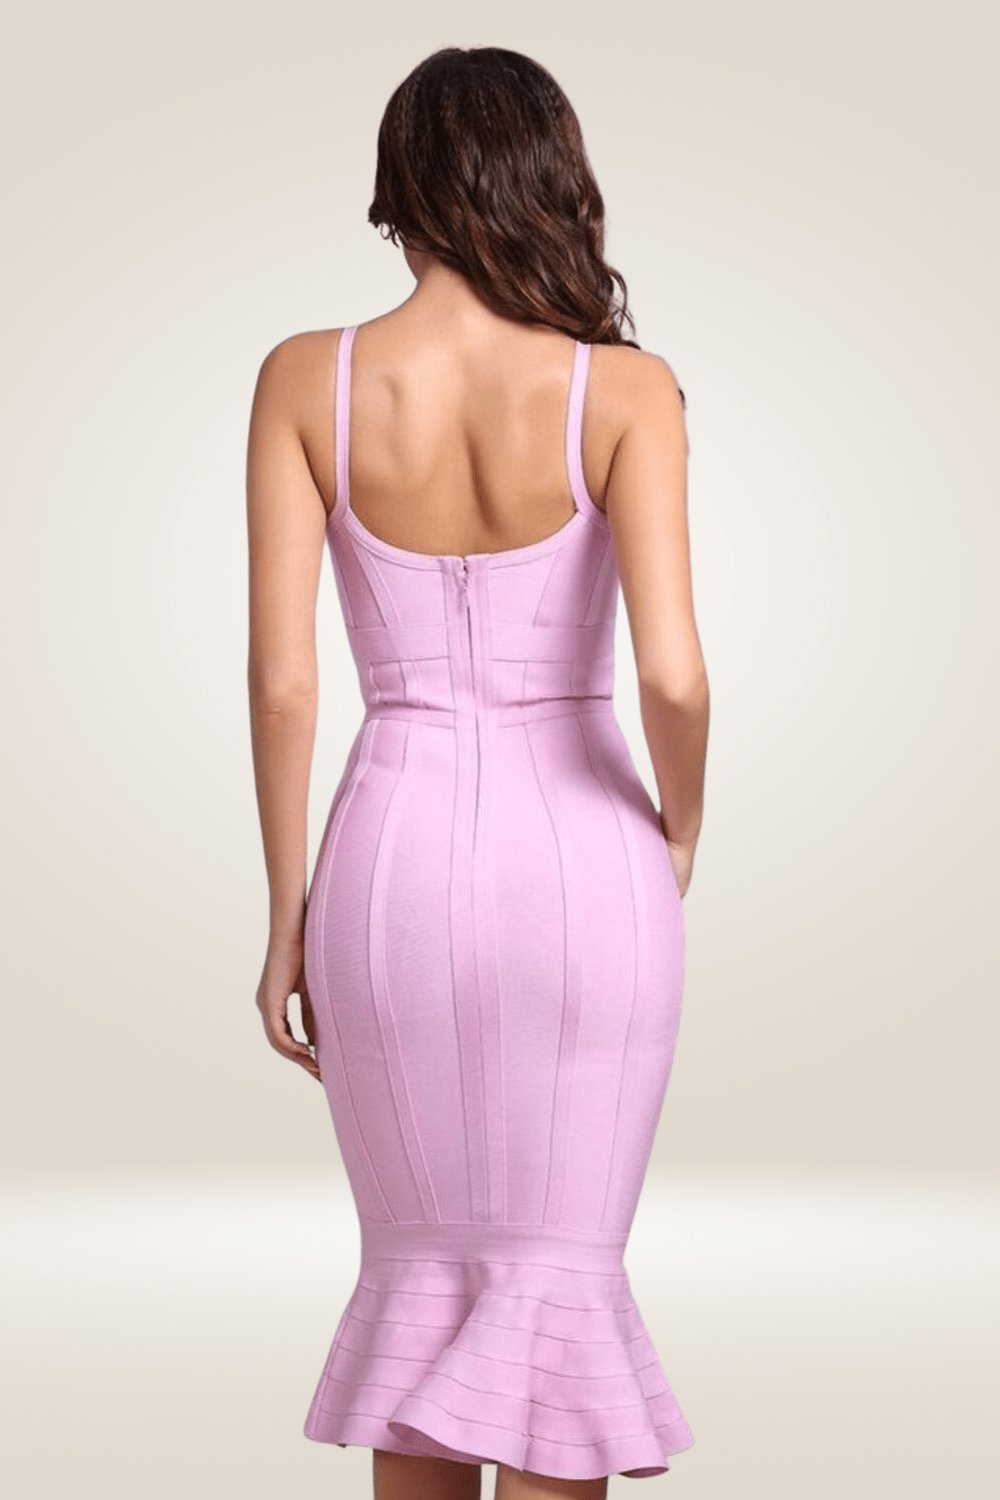 Pink Mermaid Bodycon Dress - TGC Boutique - Bodycon Dress